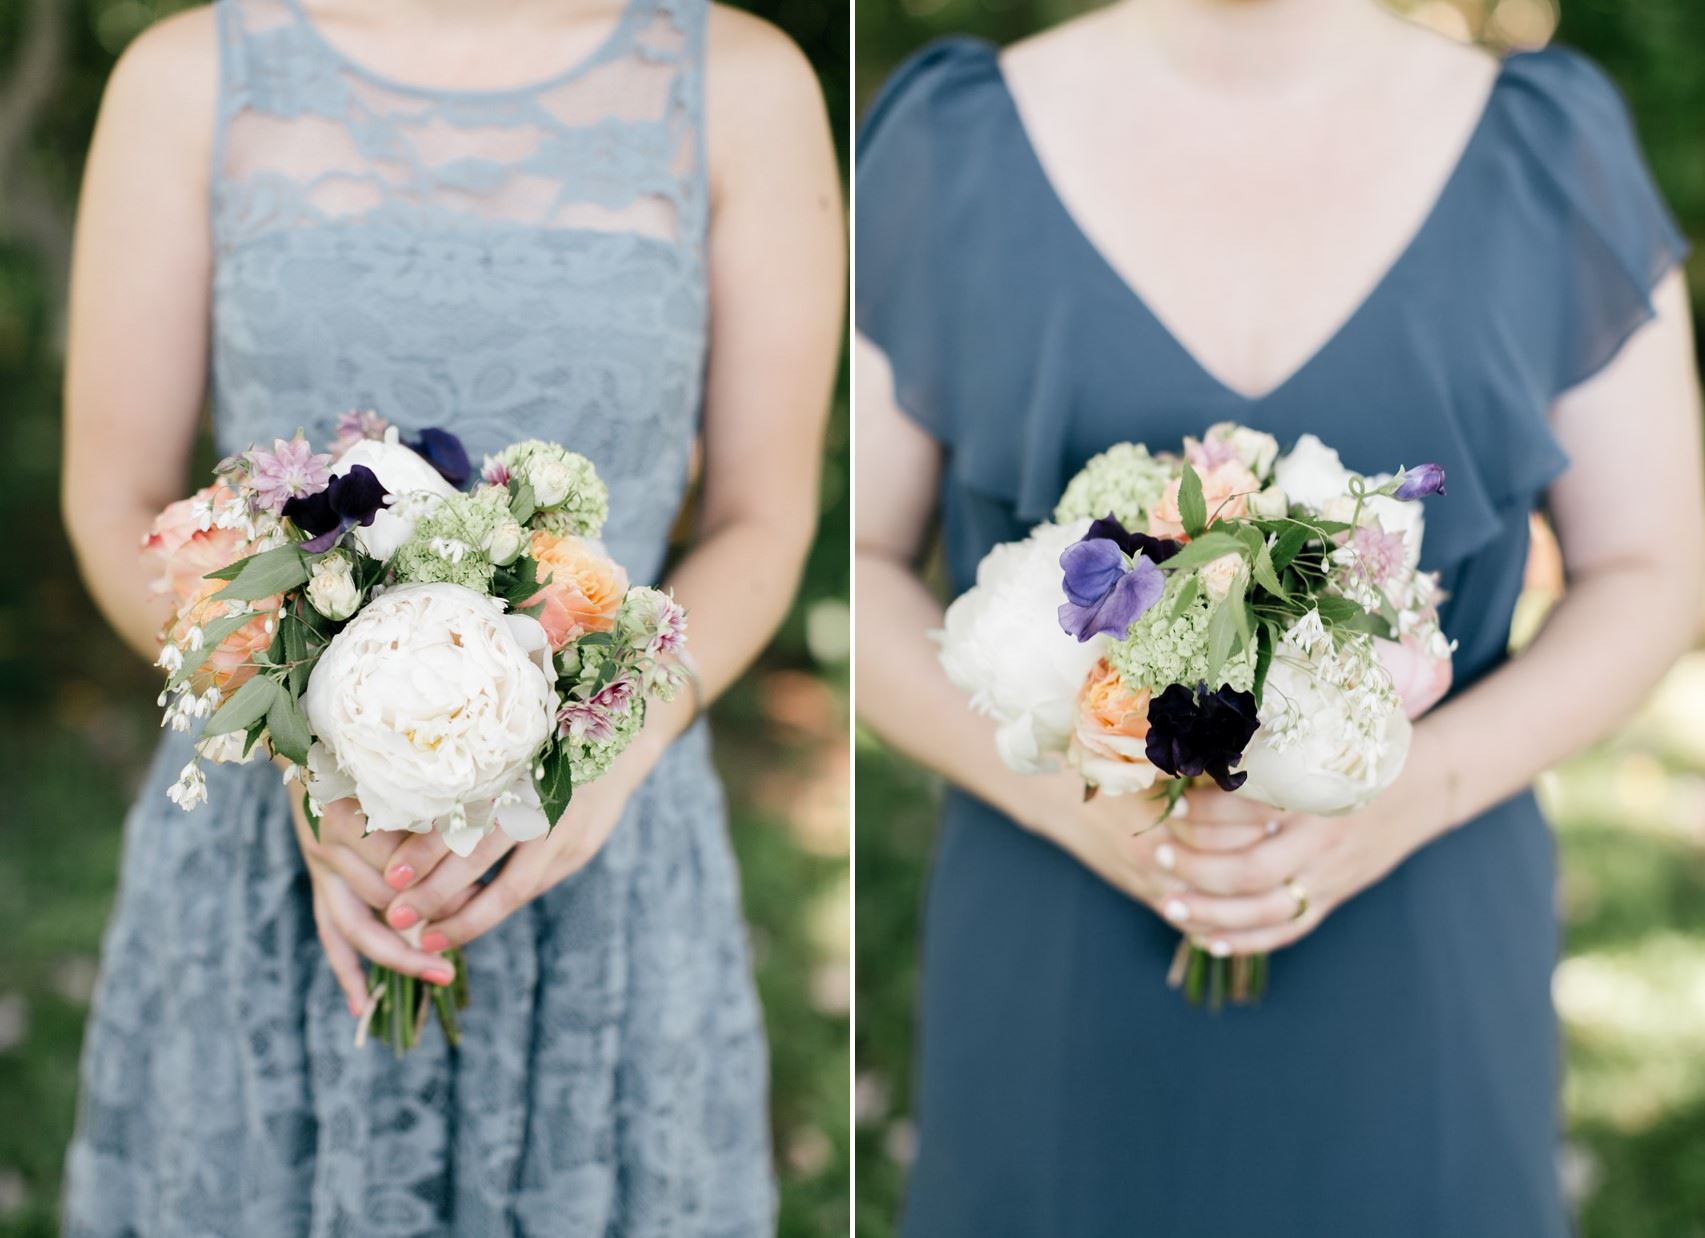 Romantic Bridesmaids Bouquets - An Enchanting Early Summer Garden Wedding